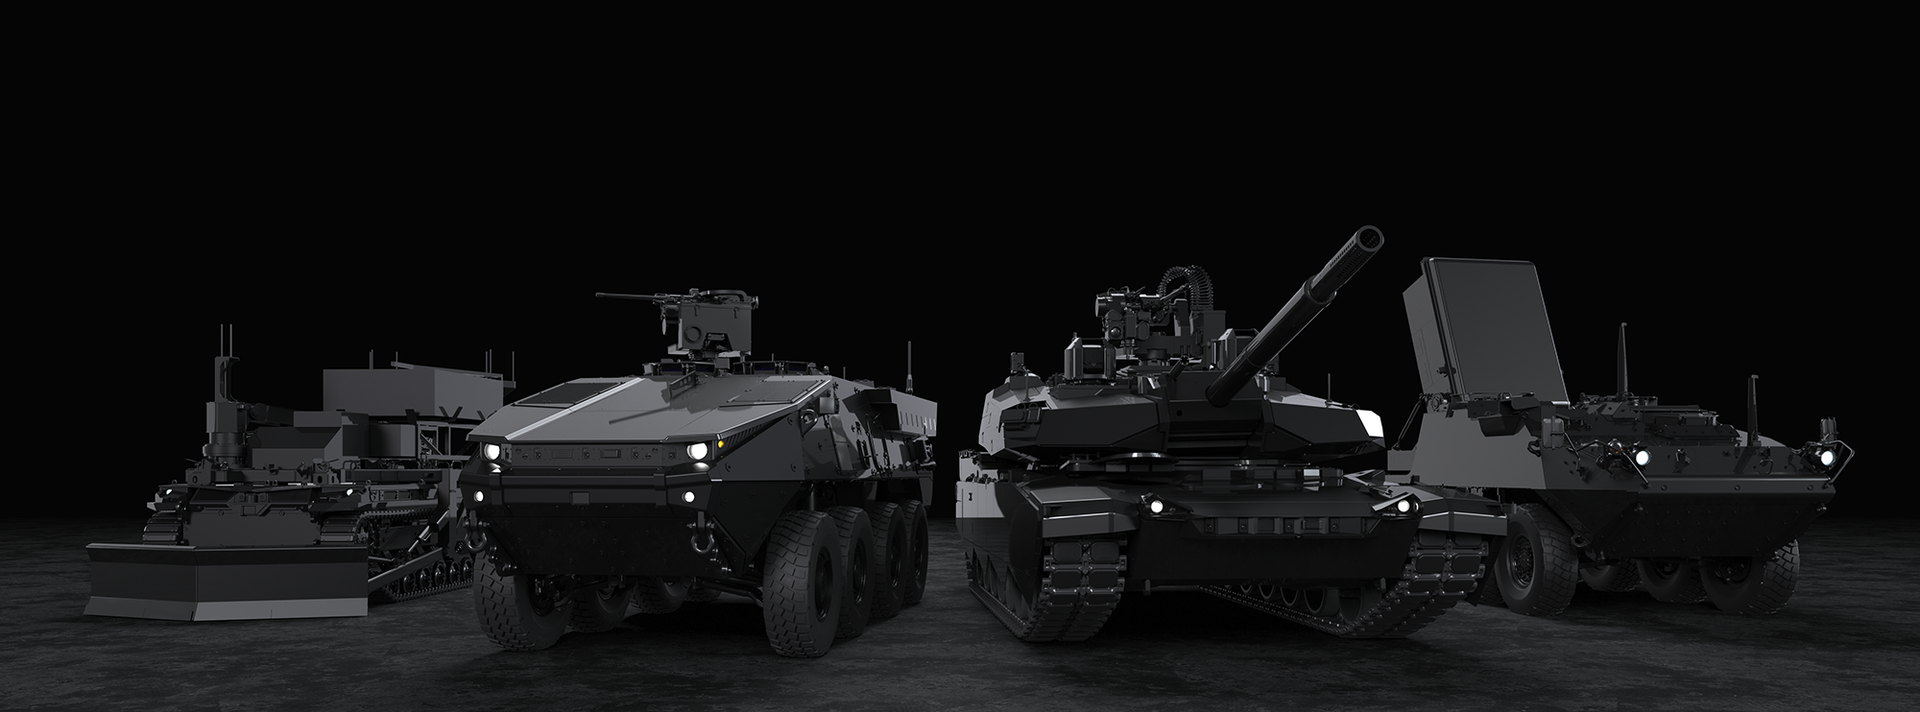 Renderings of General Dynamics Land Systems' TRX Breacher, StrykerX, AbramsX and Stryker Leonidas